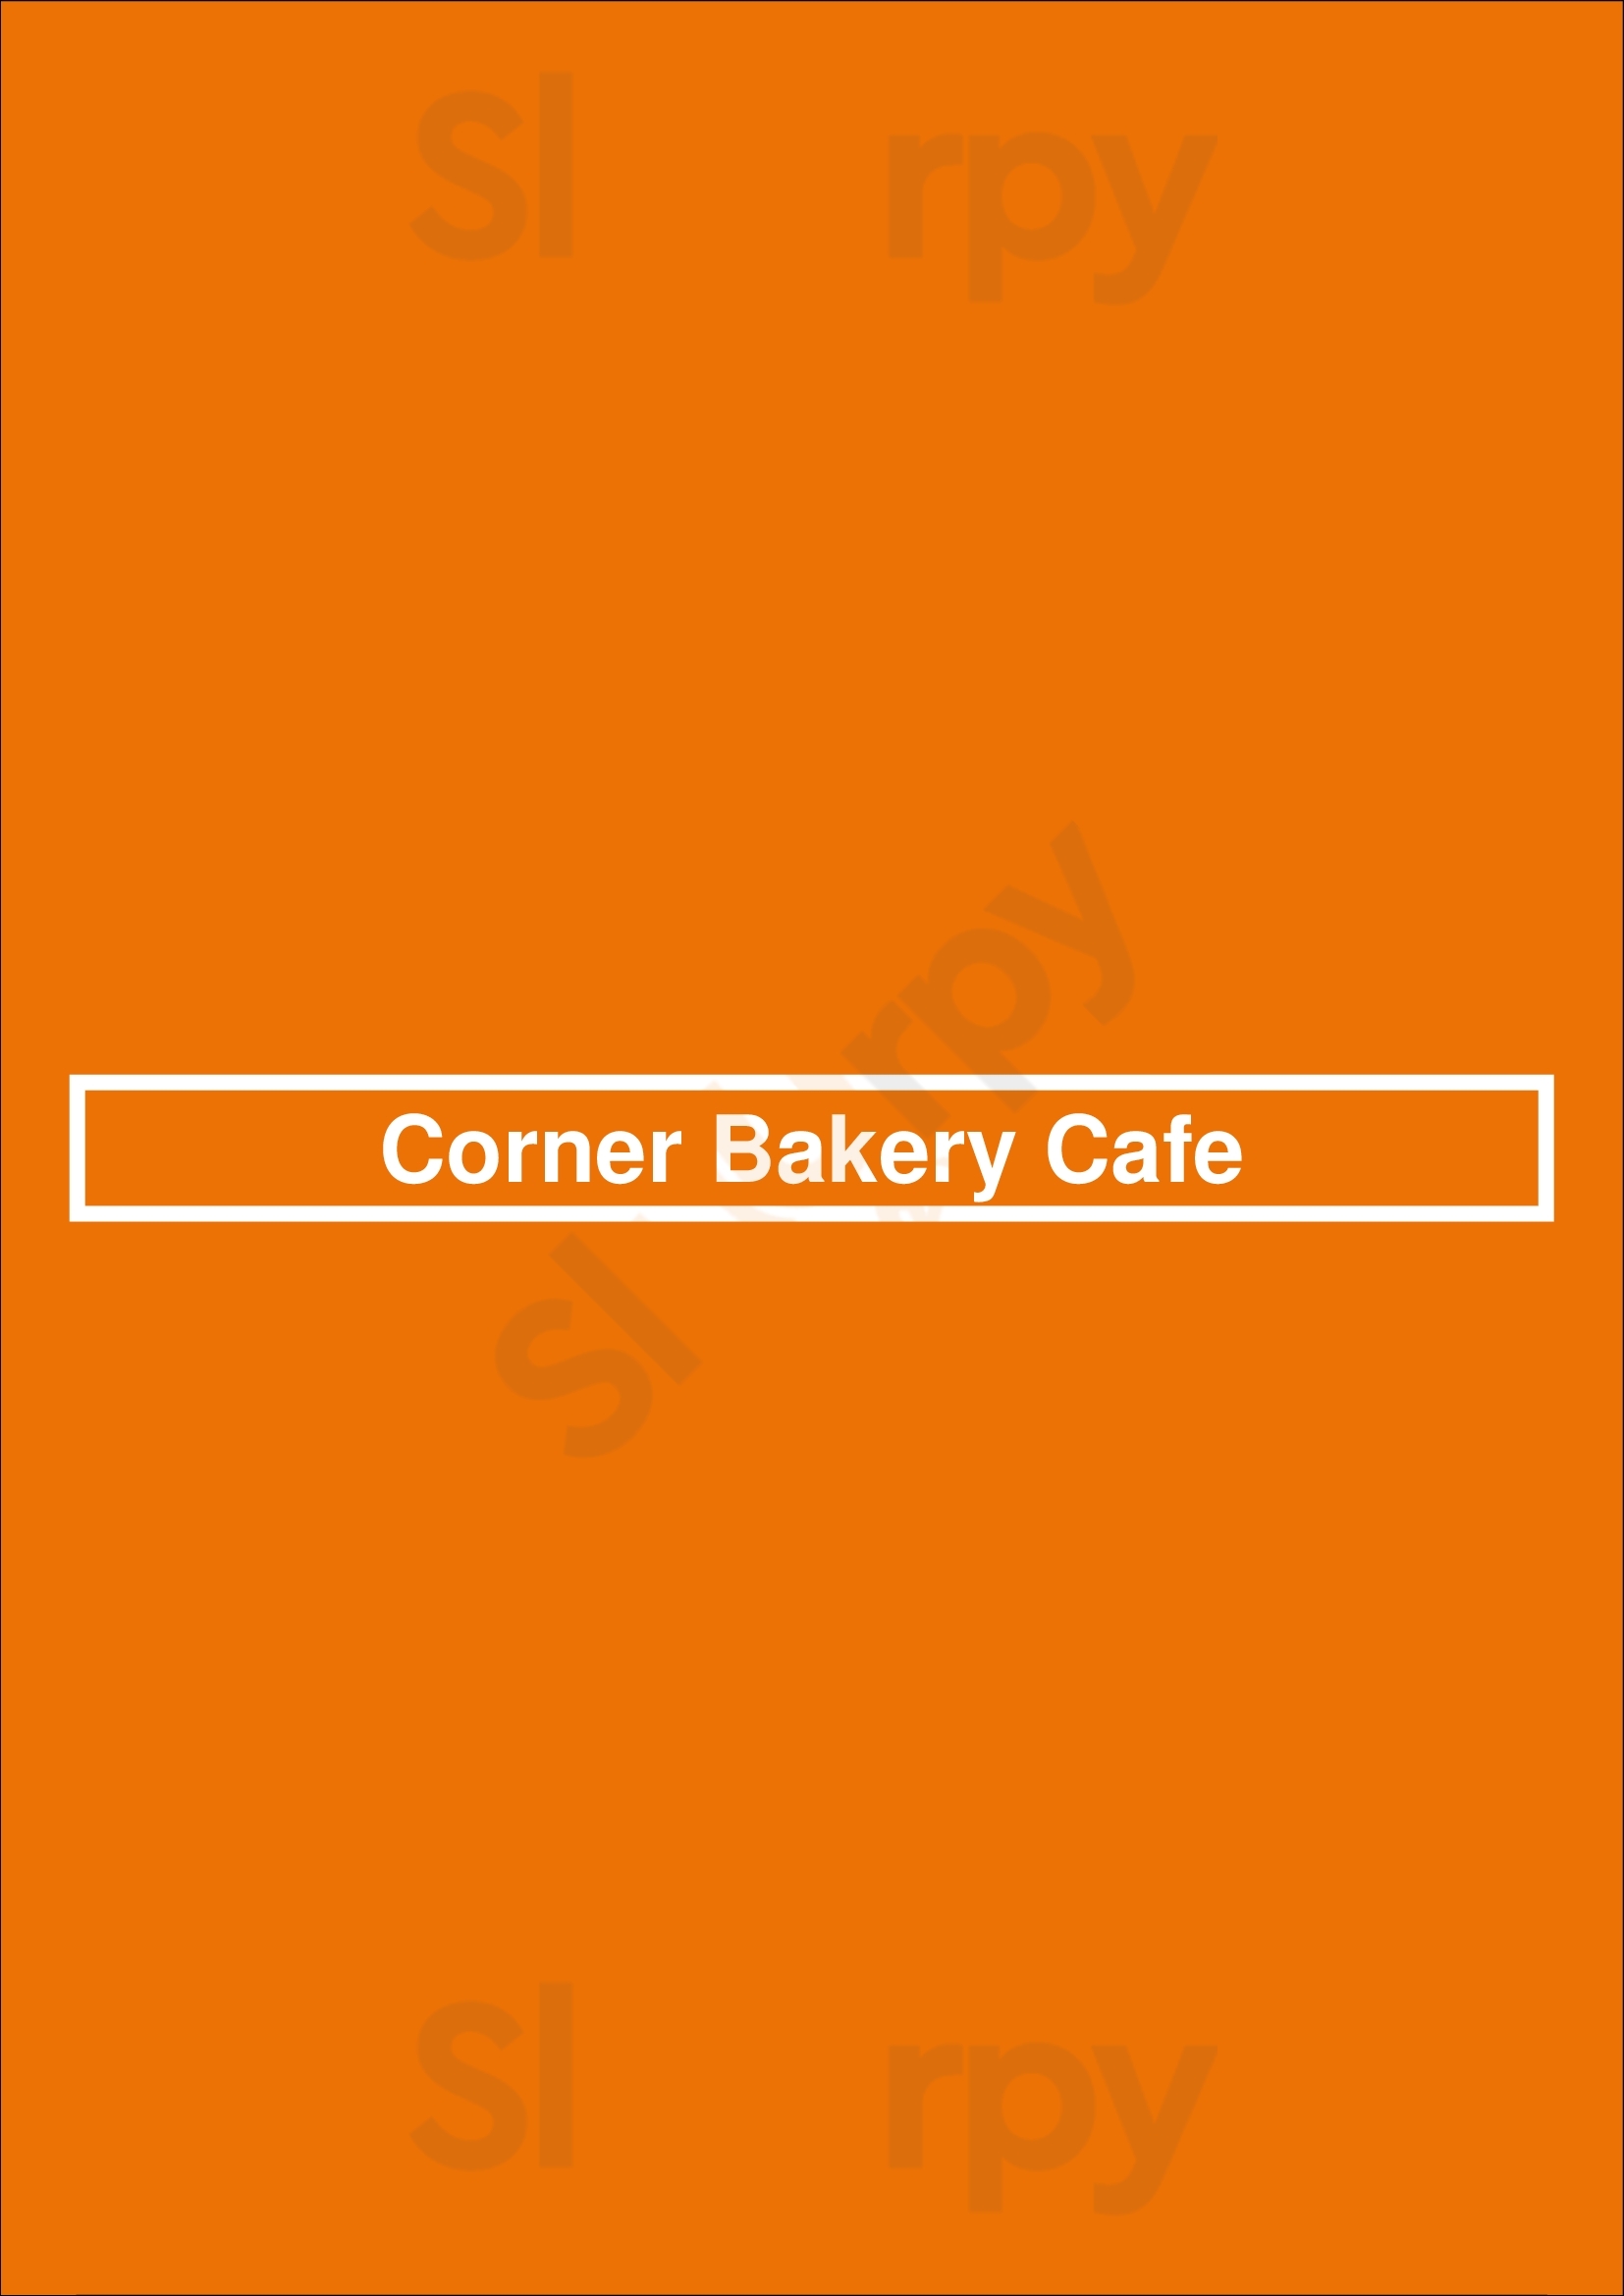 Corner Bakery Cafe Houston Menu - 1